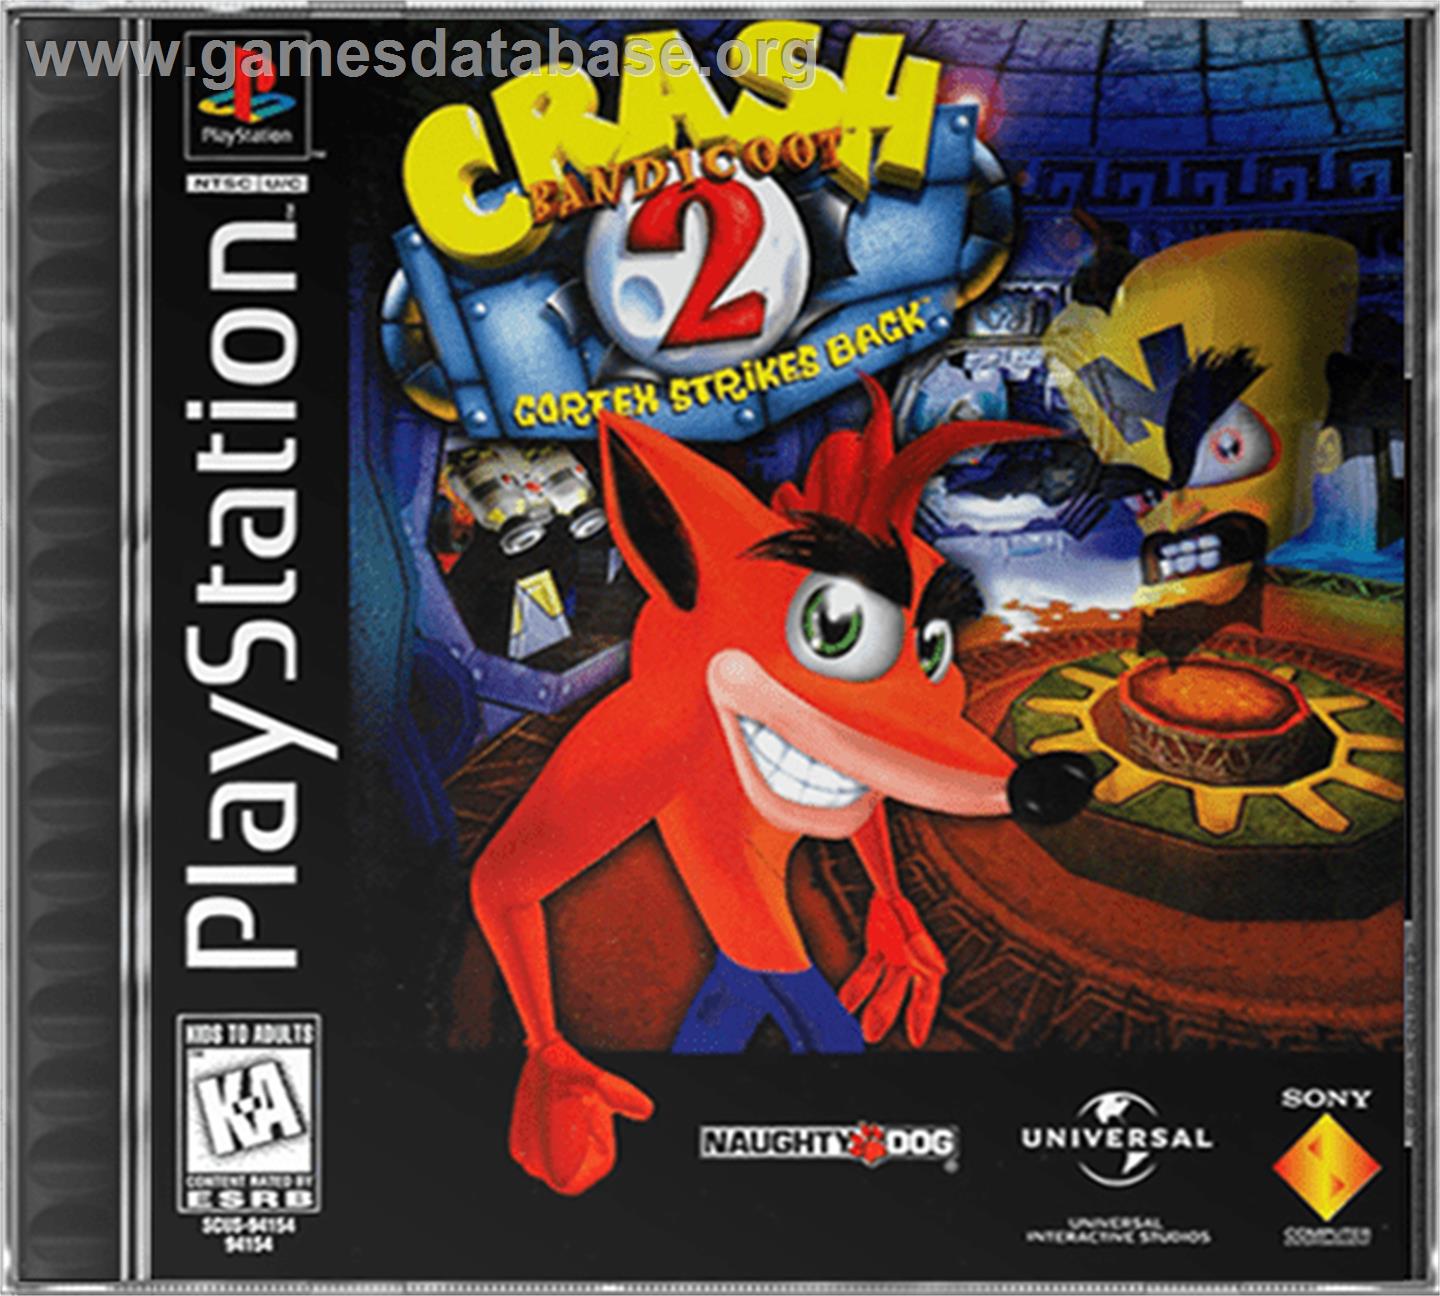 Crash Bandicoot 2: Cortex Strikes Back - Sony Playstation - Artwork - Box